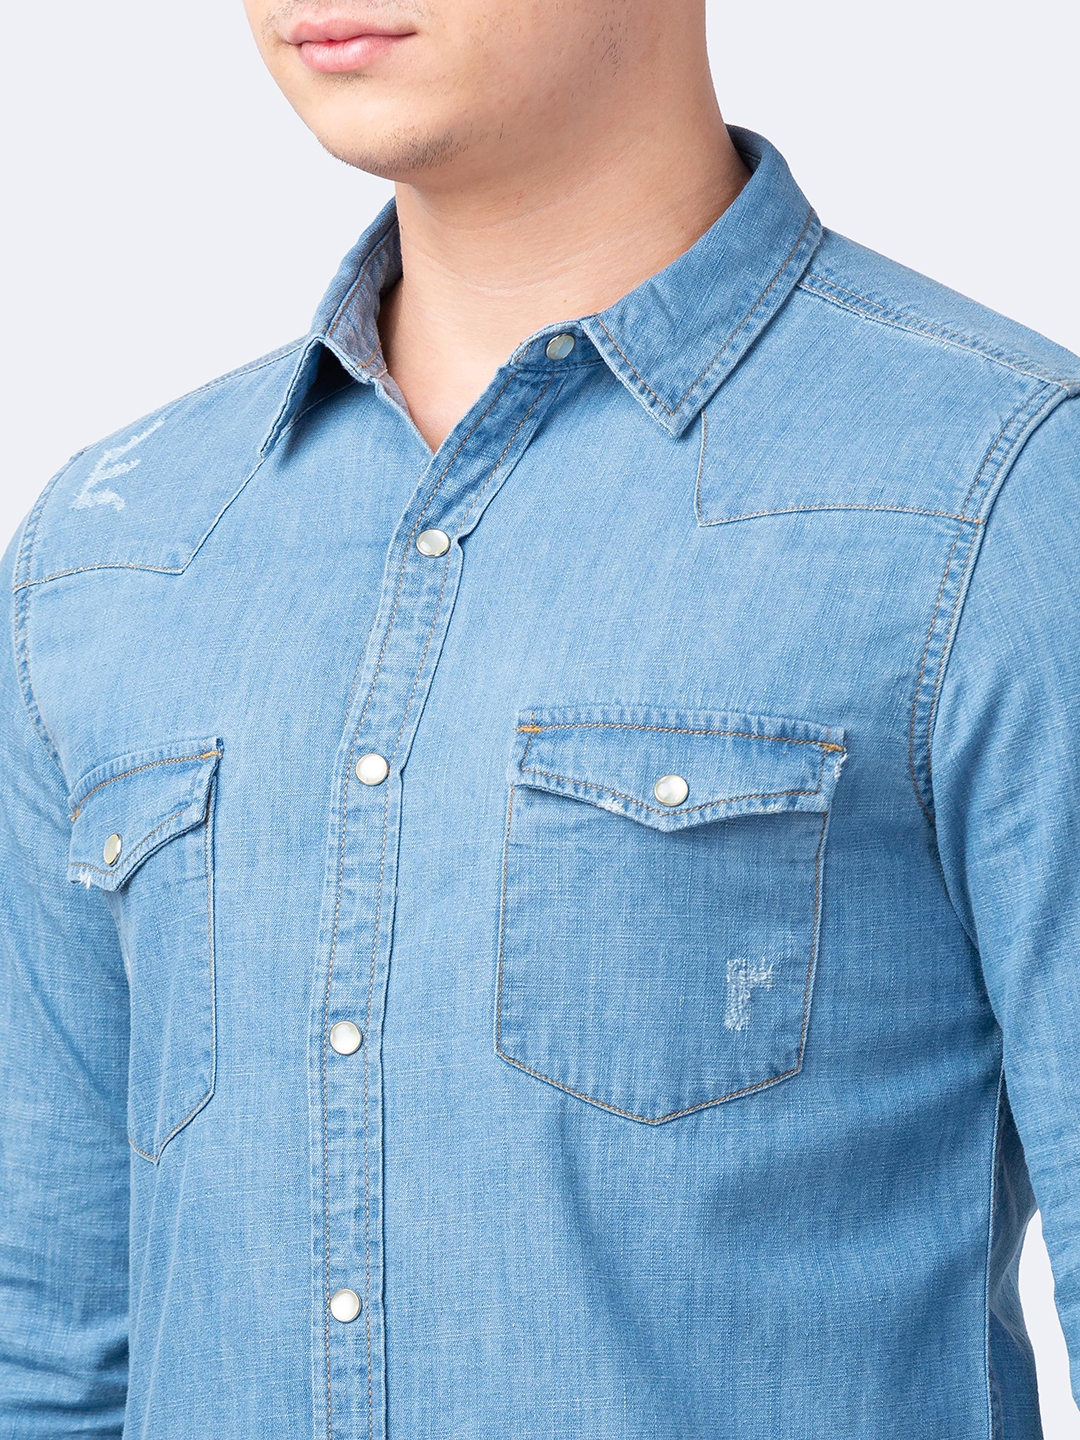 Spykar | Men's Blue Cotton Solid Casual Shirts 4